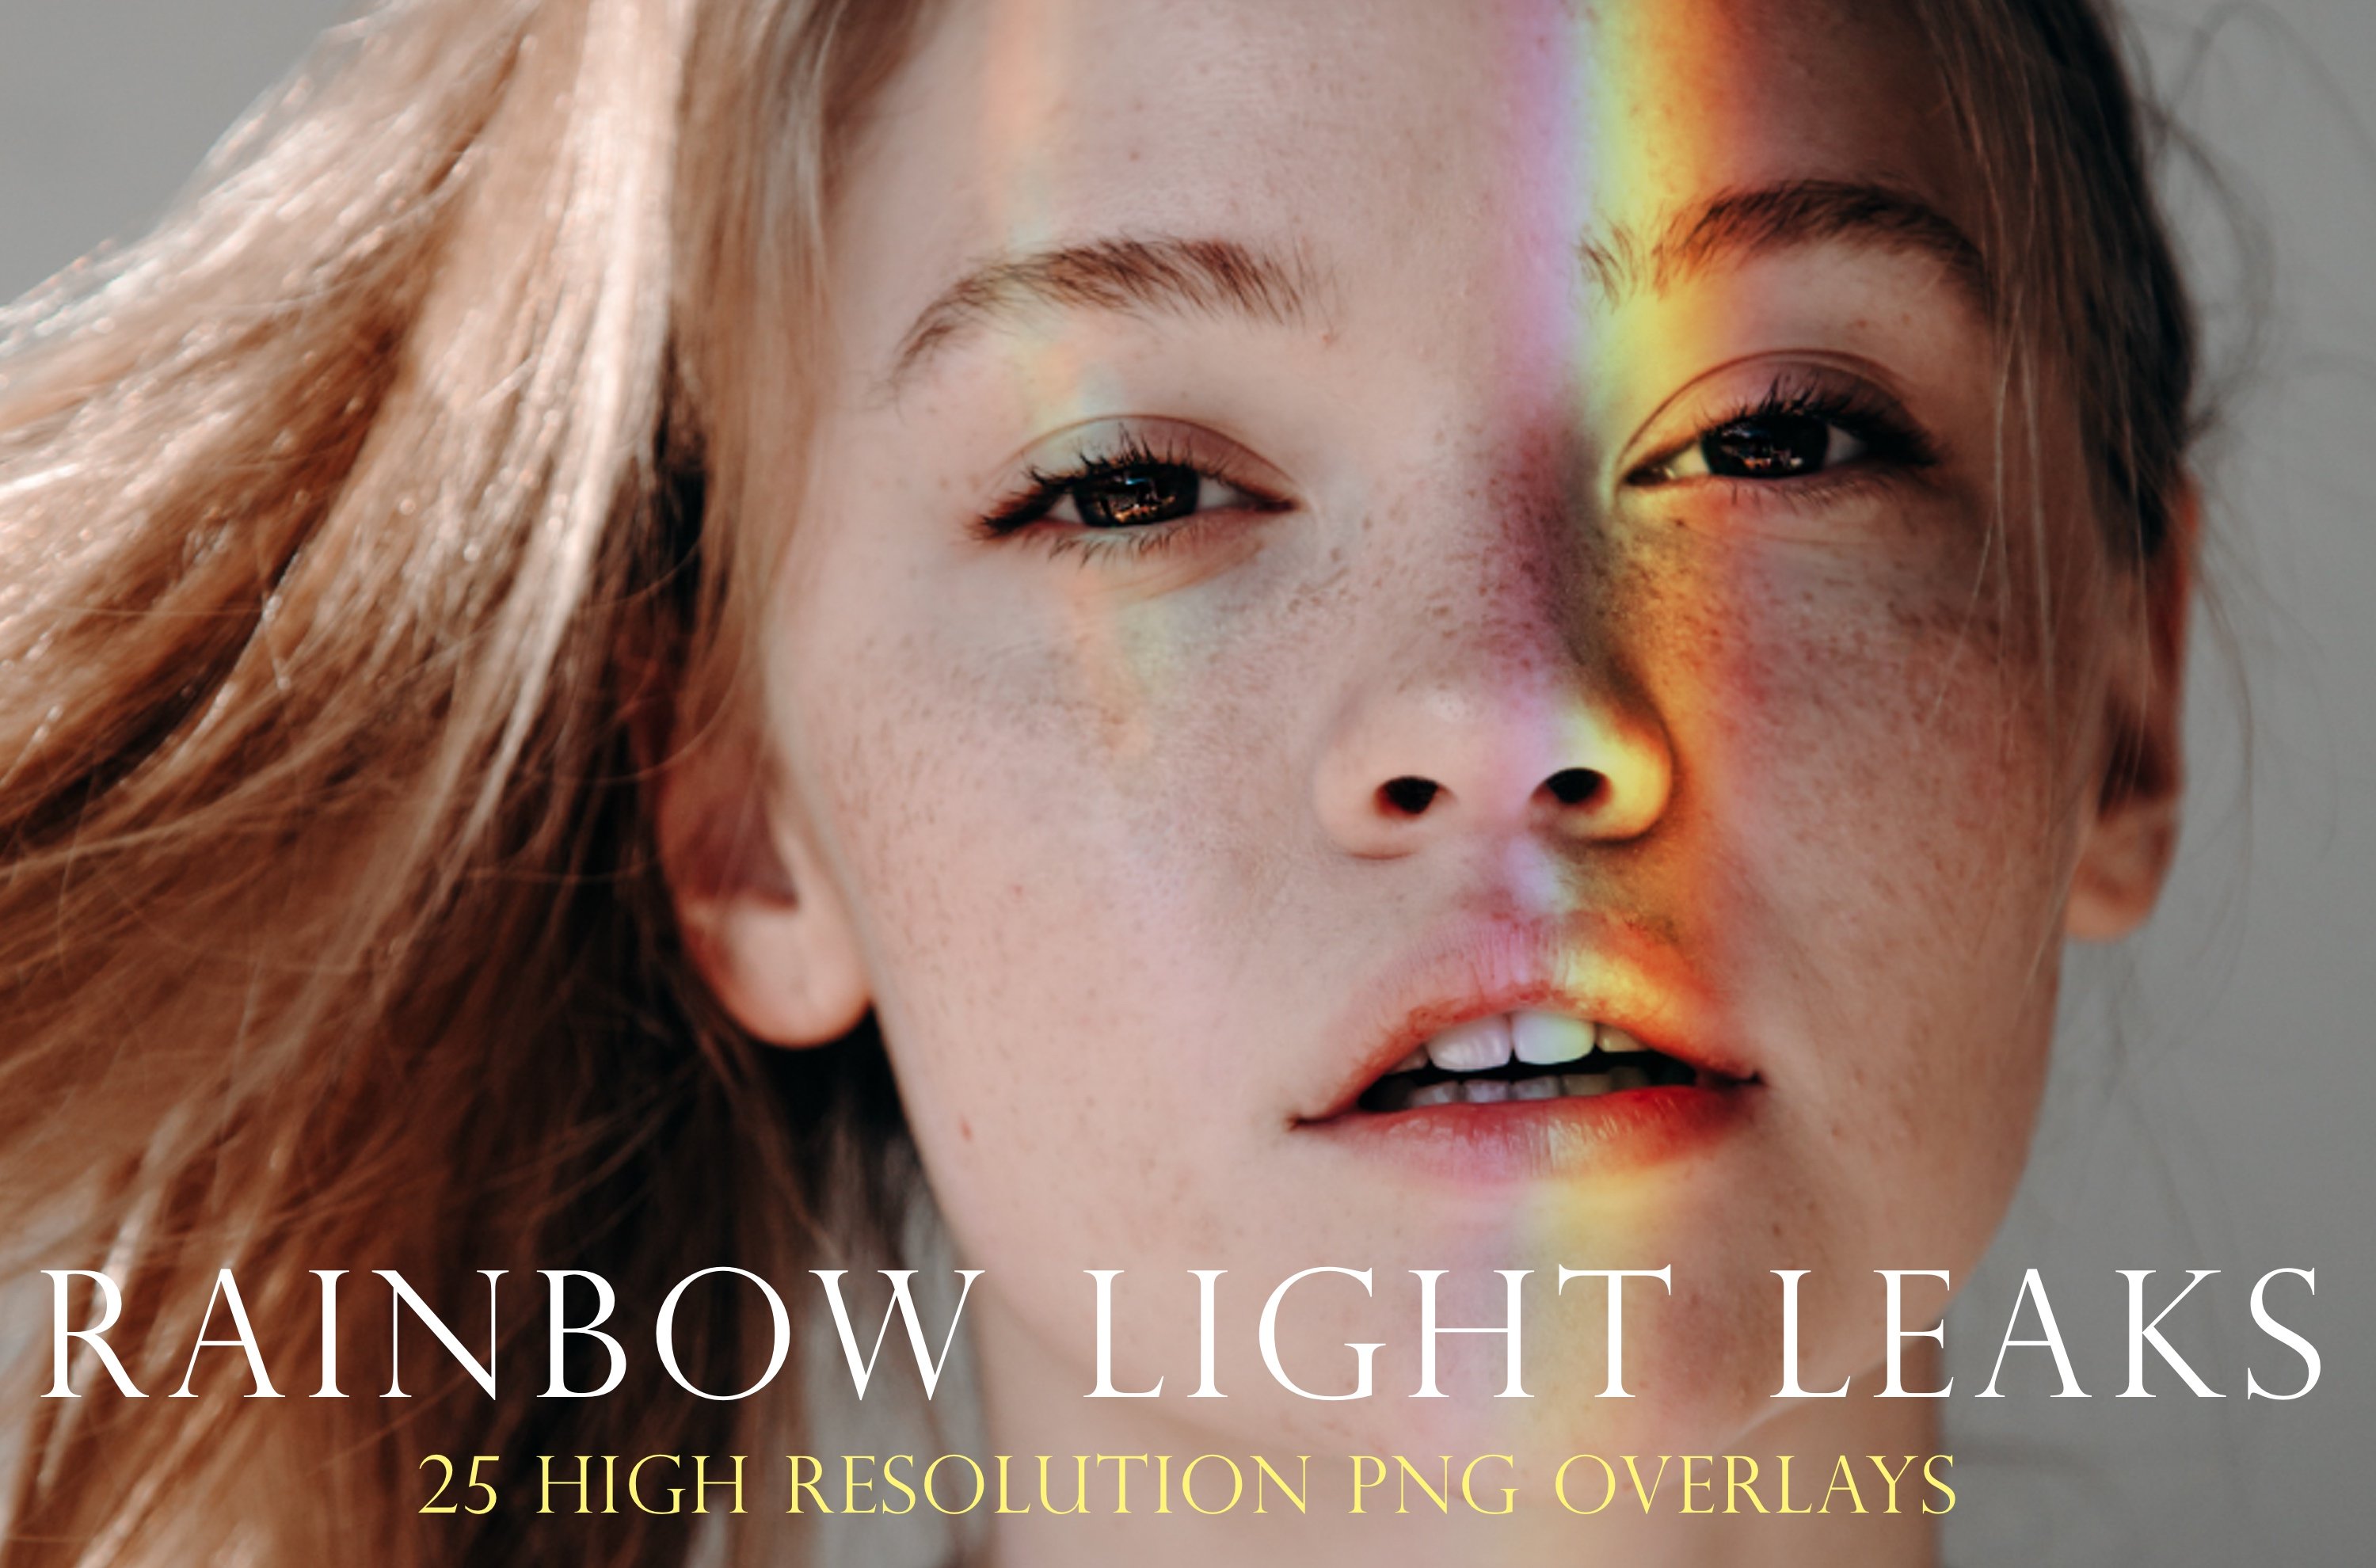 Rainbow light leak overlayscover image.